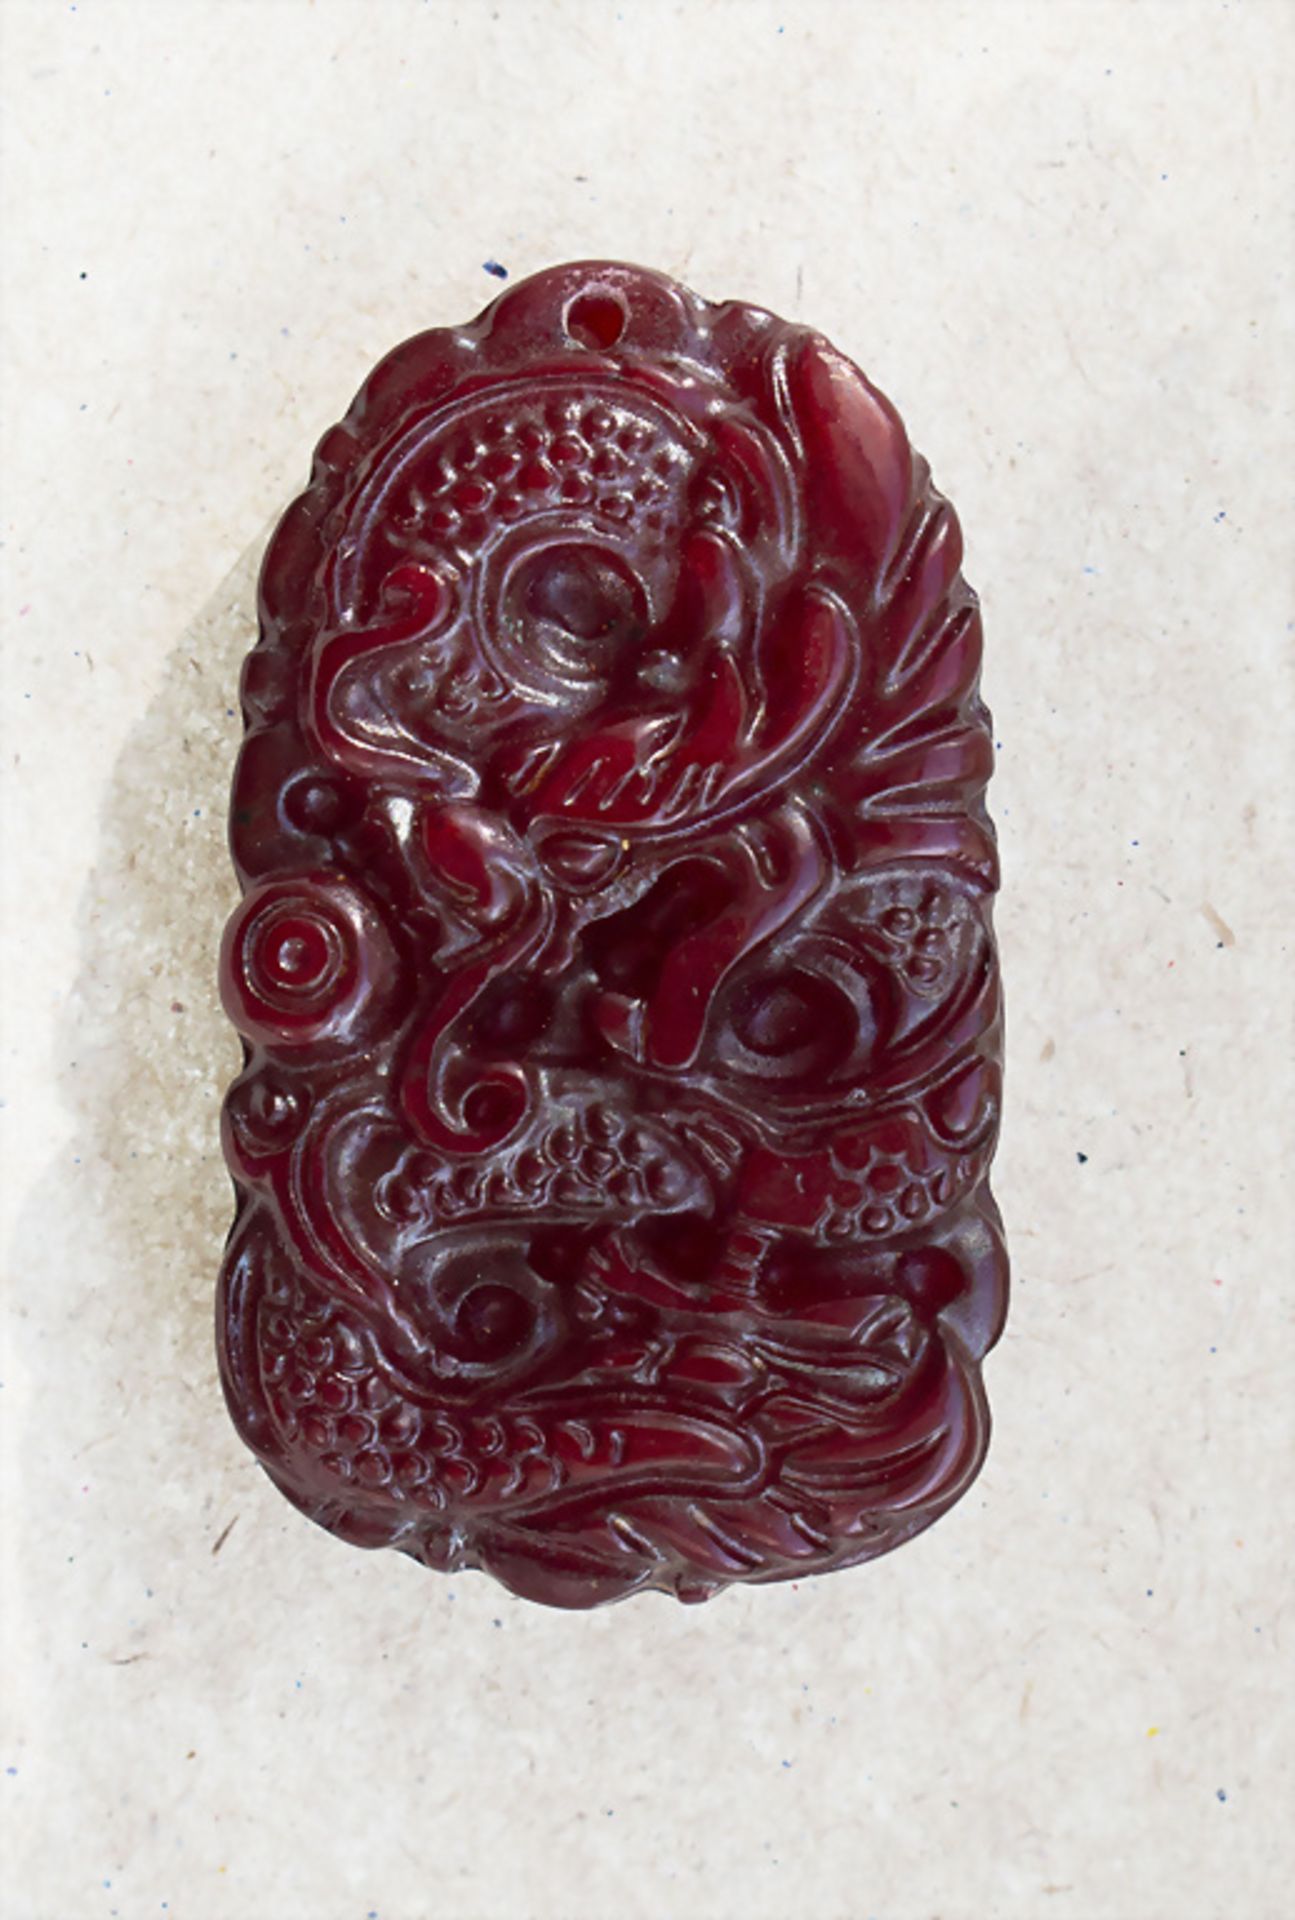 Anhänger mit Drachen aus rote Jade (?) / A red jade (?) pendant - Image 2 of 4